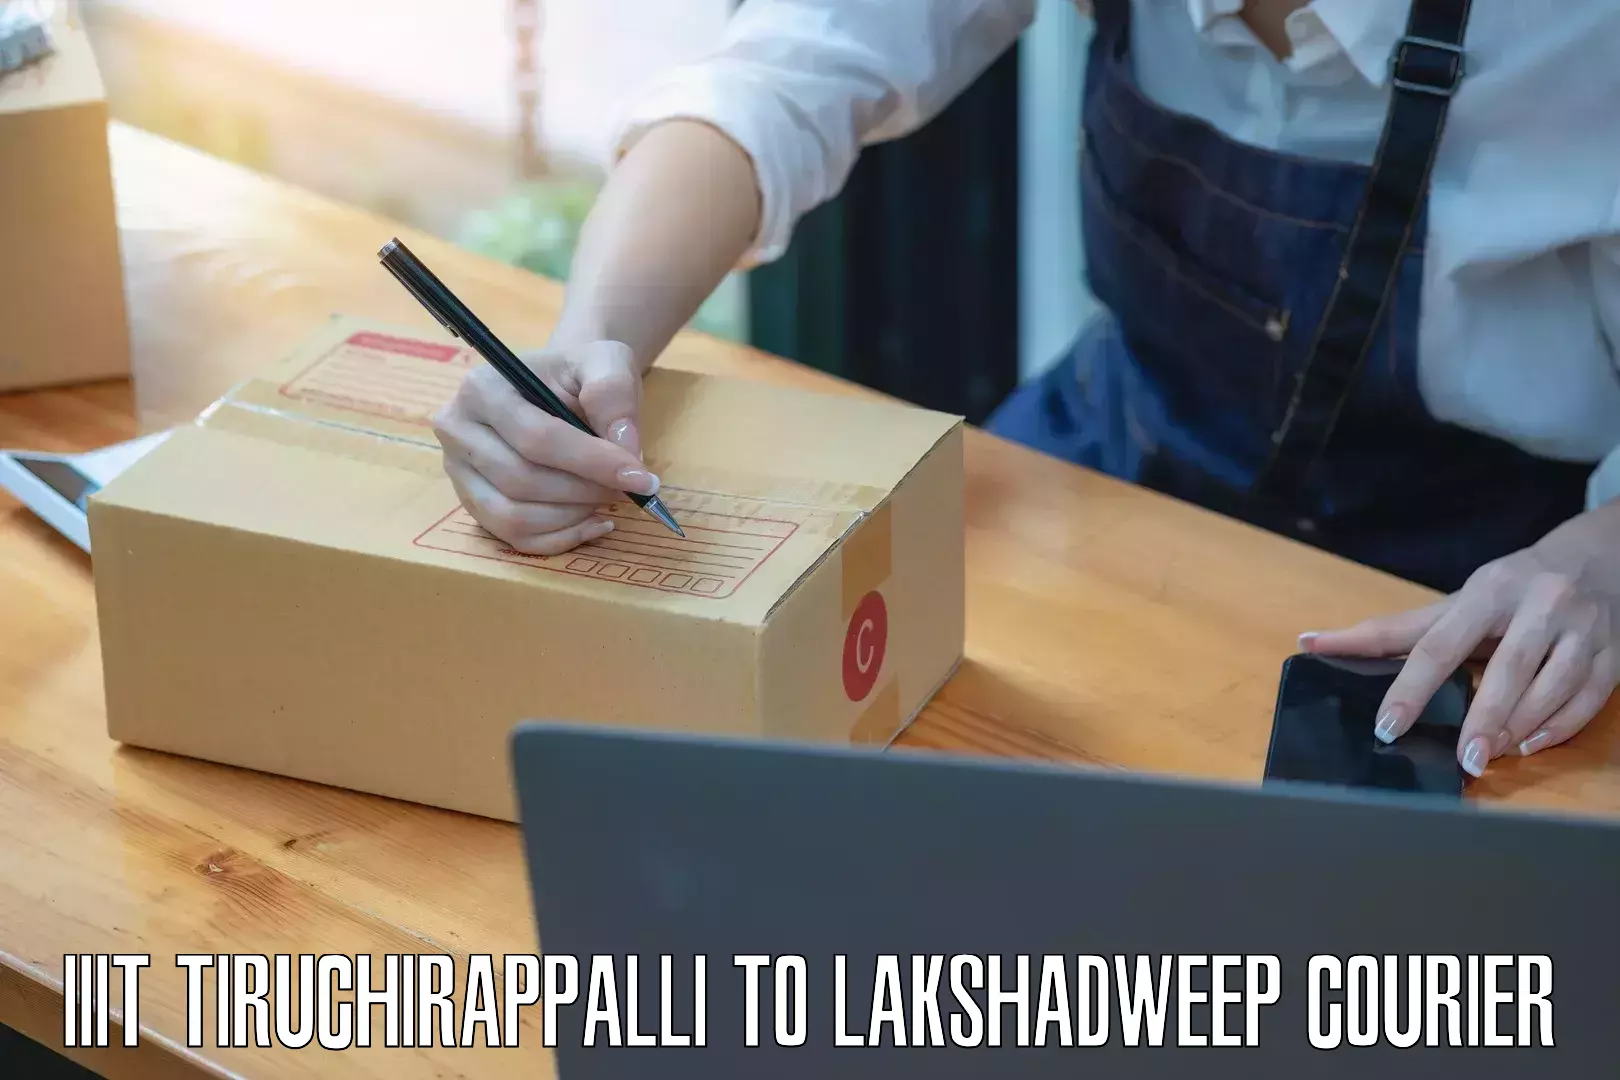 Next-day delivery options IIIT Tiruchirappalli to Lakshadweep